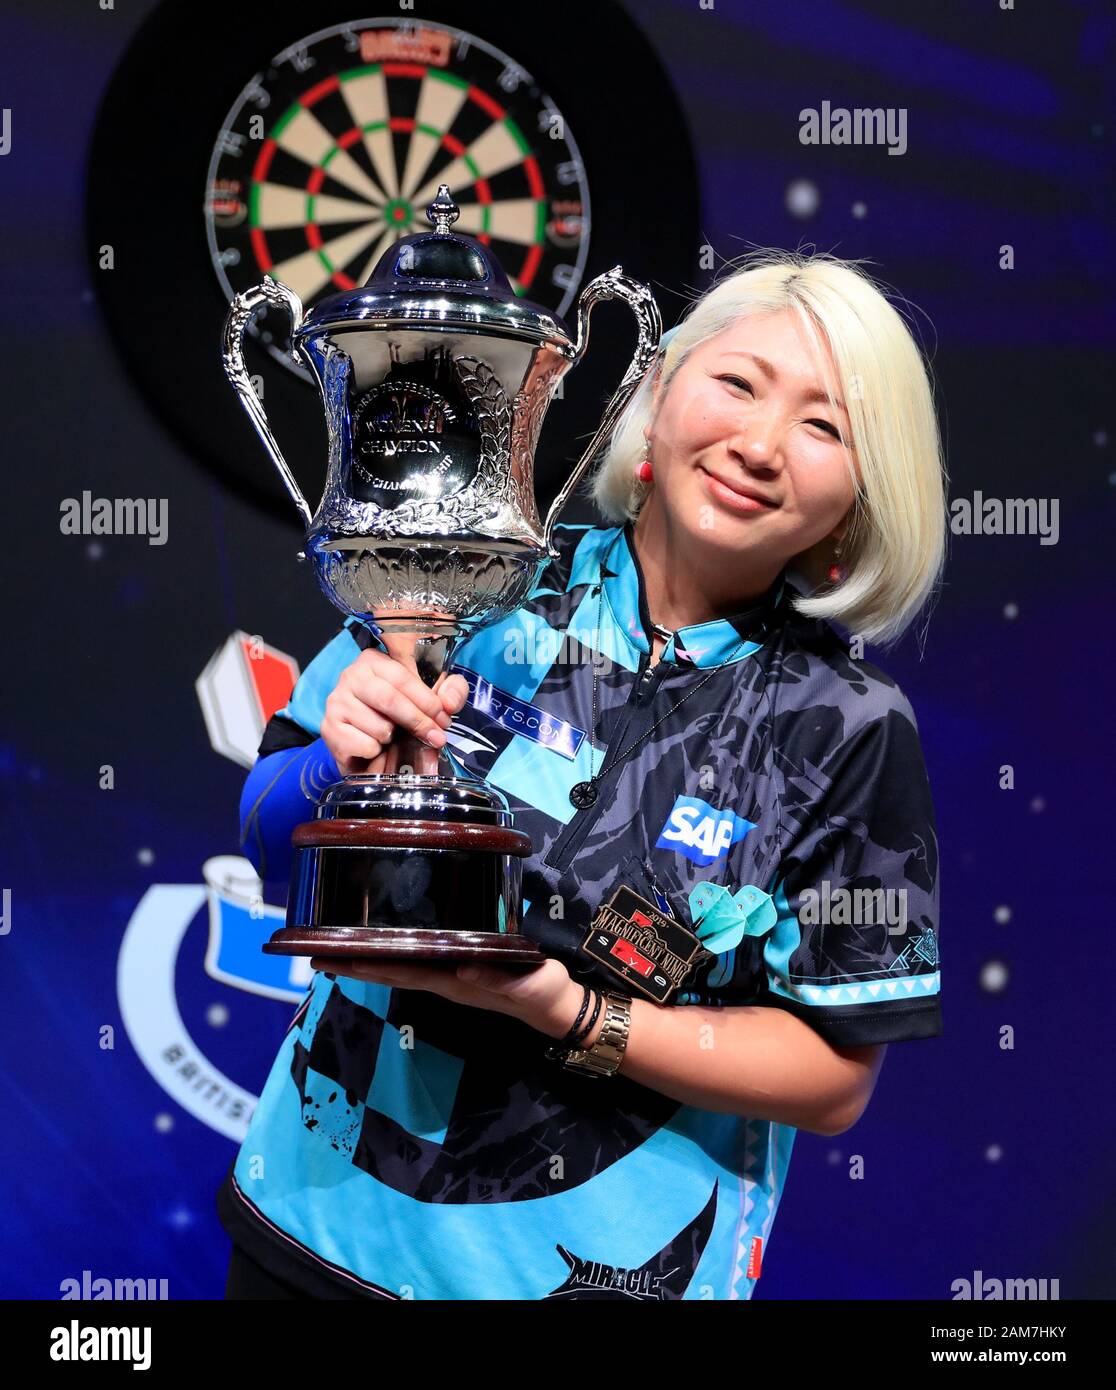 Mikuru Suzuki celebrates winning the women's championship eight of the BDO World Professional Darts Championships 2020 at The O2, London Stock Photo - Alamy